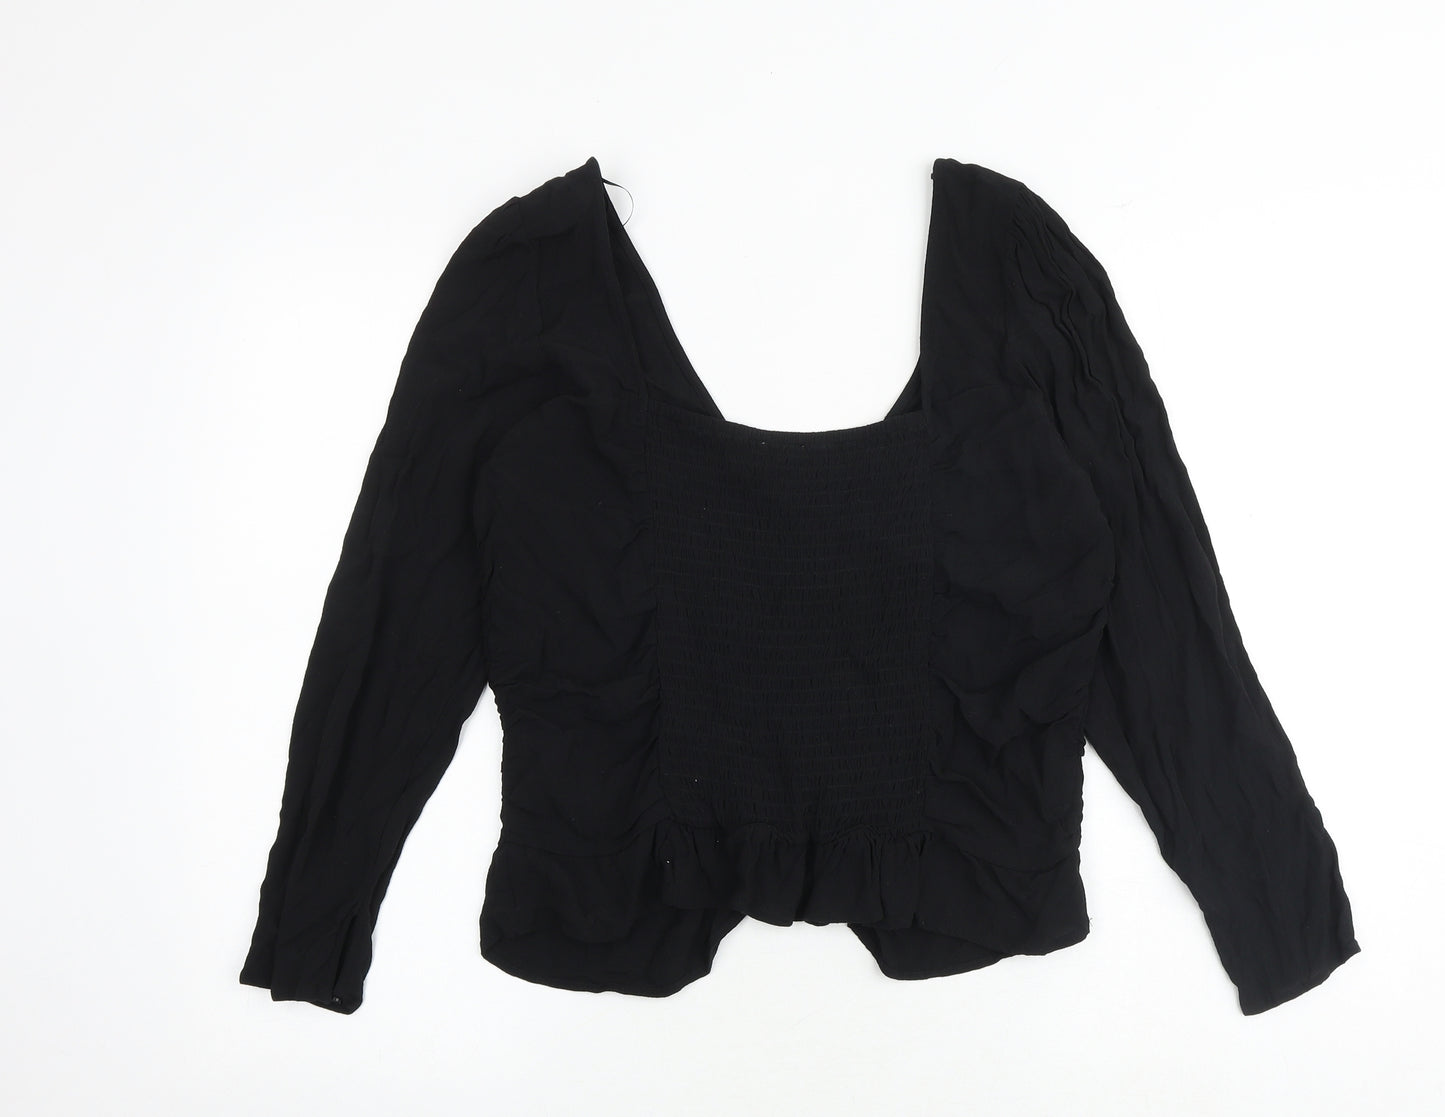 H&M Womens Black Viscose Basic Blouse Size XL V-Neck - Ruched Front